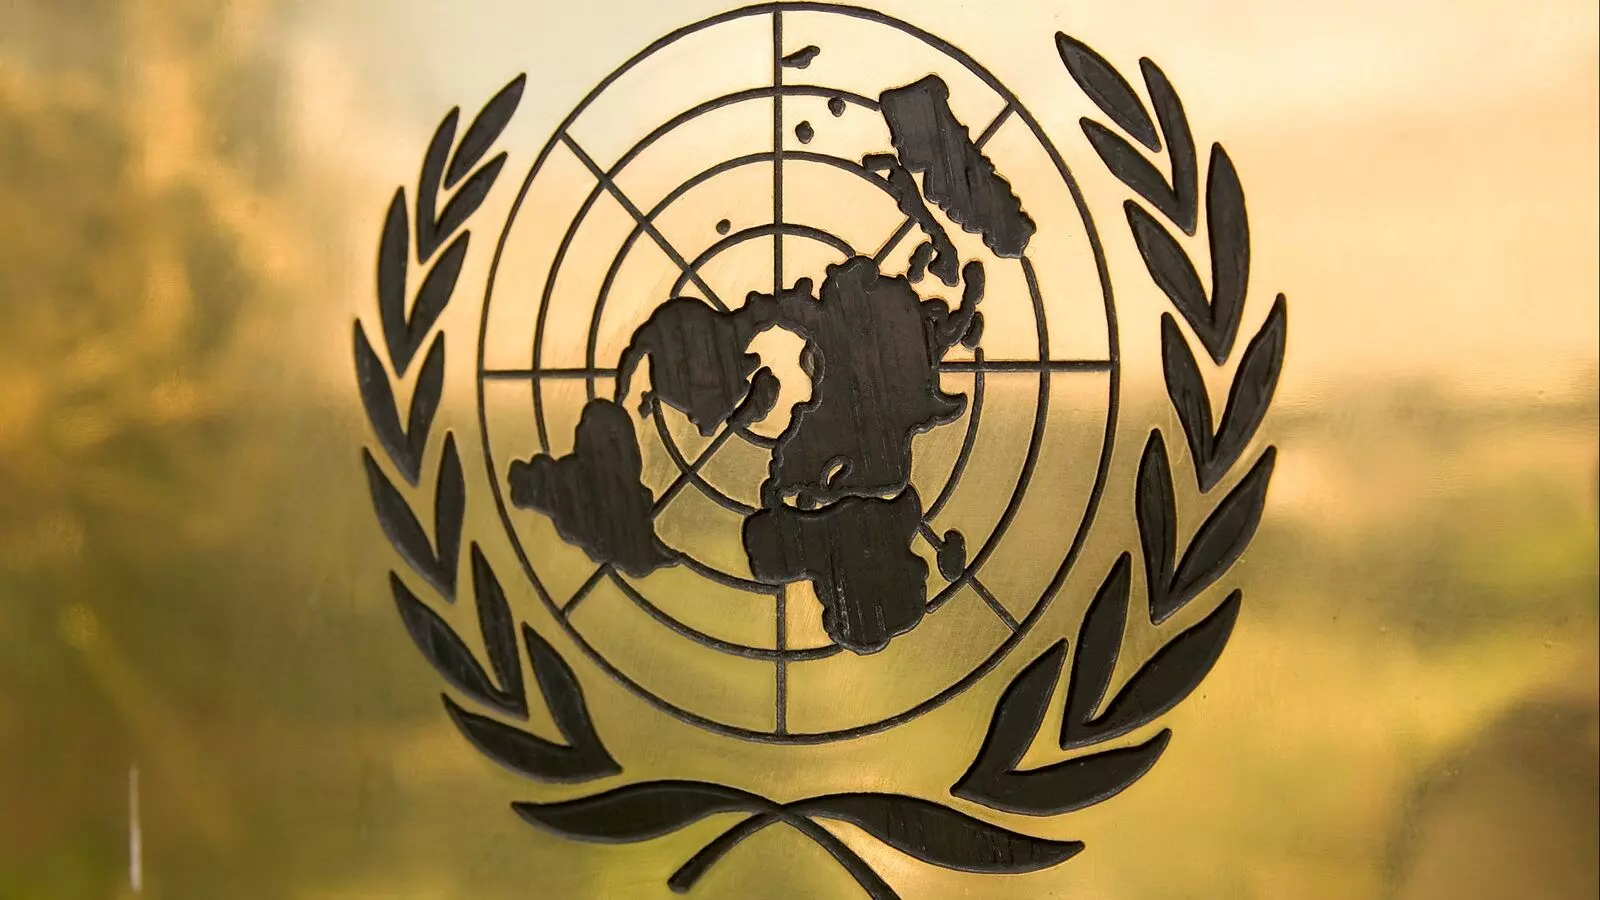 Women deeply under-represented in govt leadership roles: UN